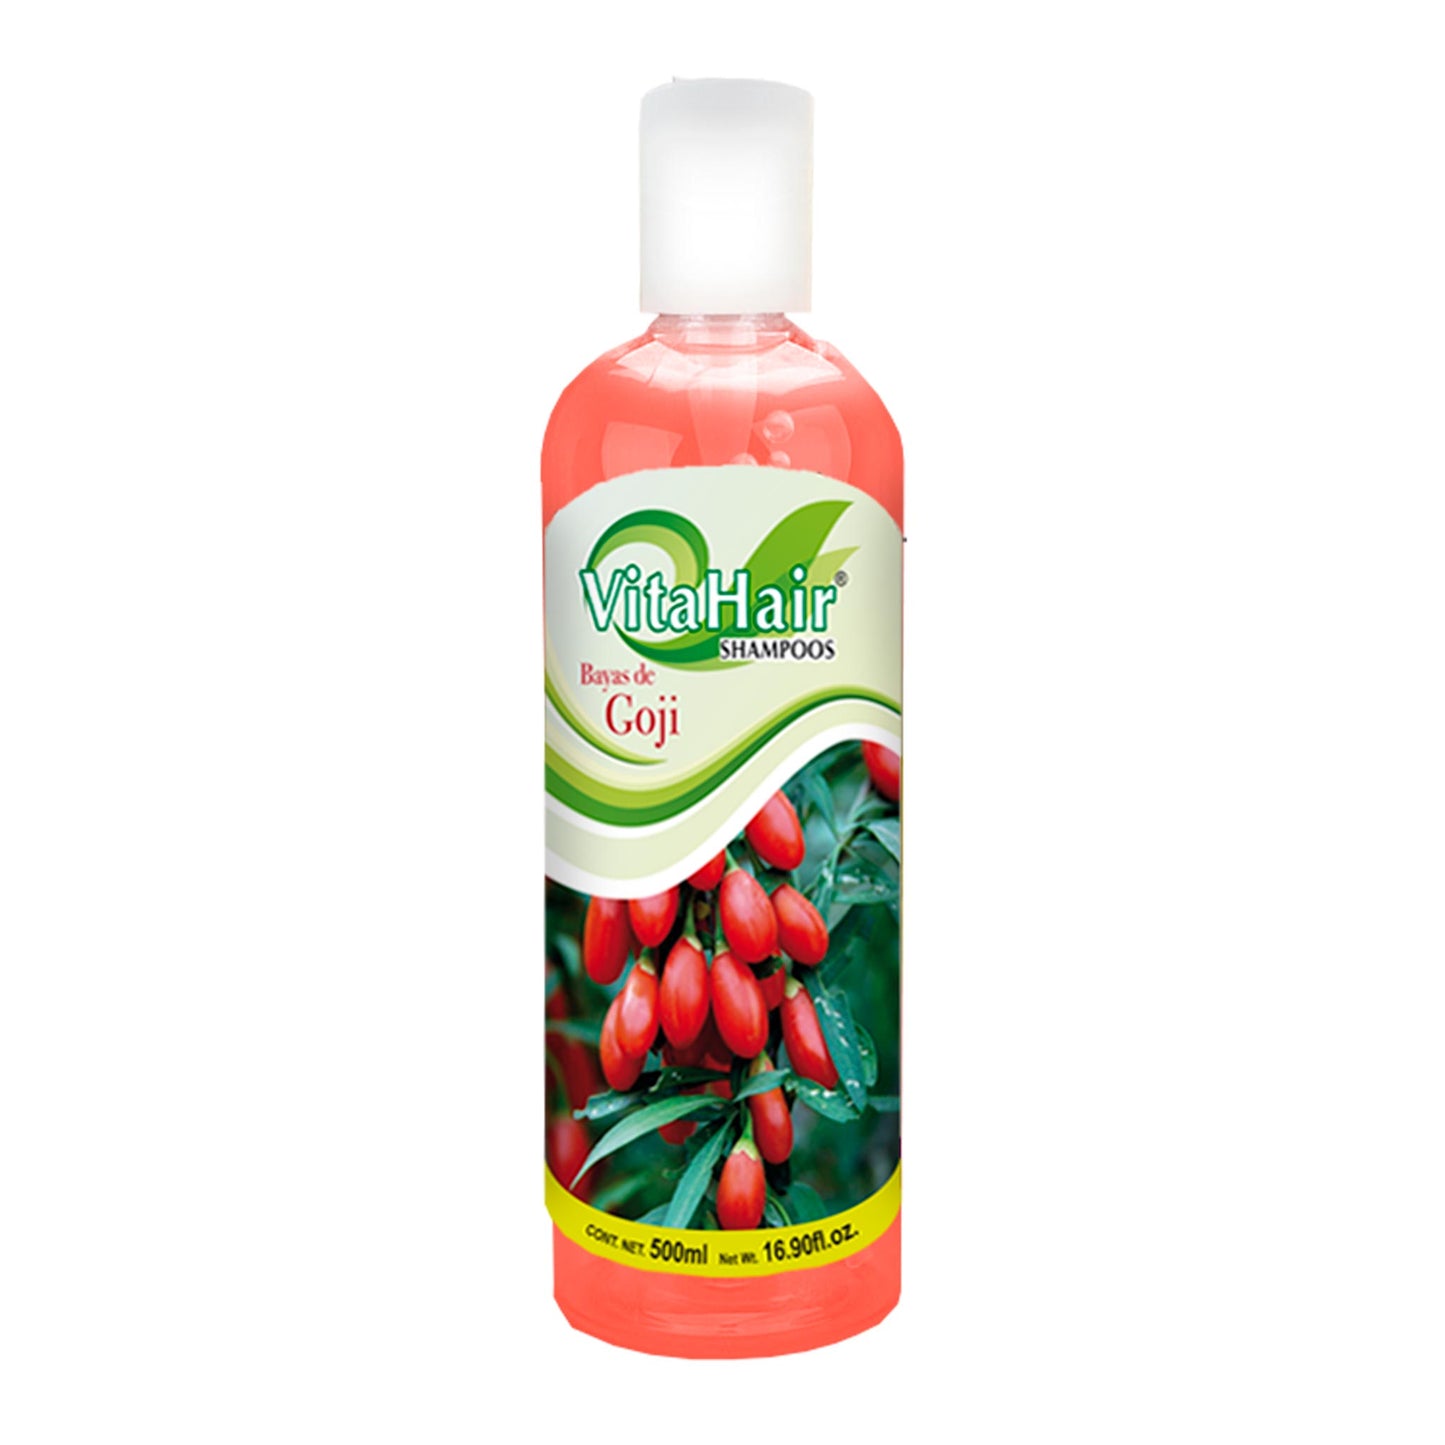 VITAHAIR ® shampoo de goji 500ml